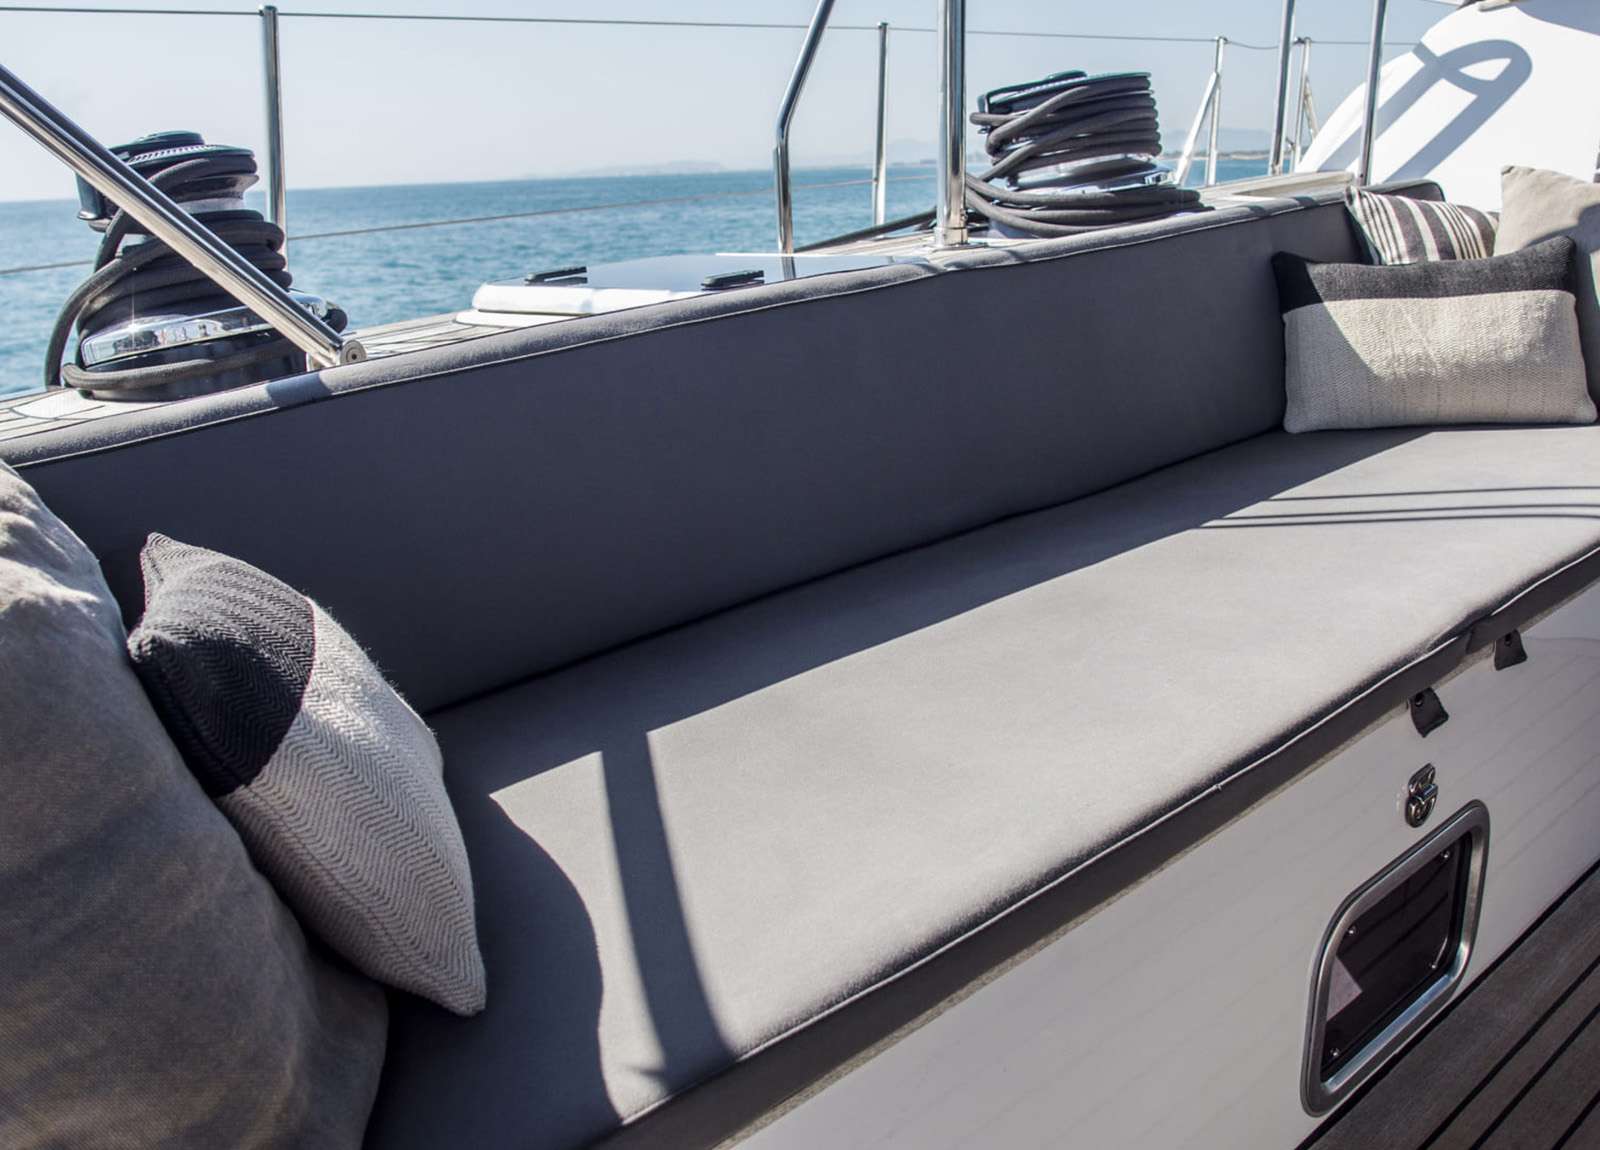 upperdeck luxury sailing yacht trehard 30m aizu